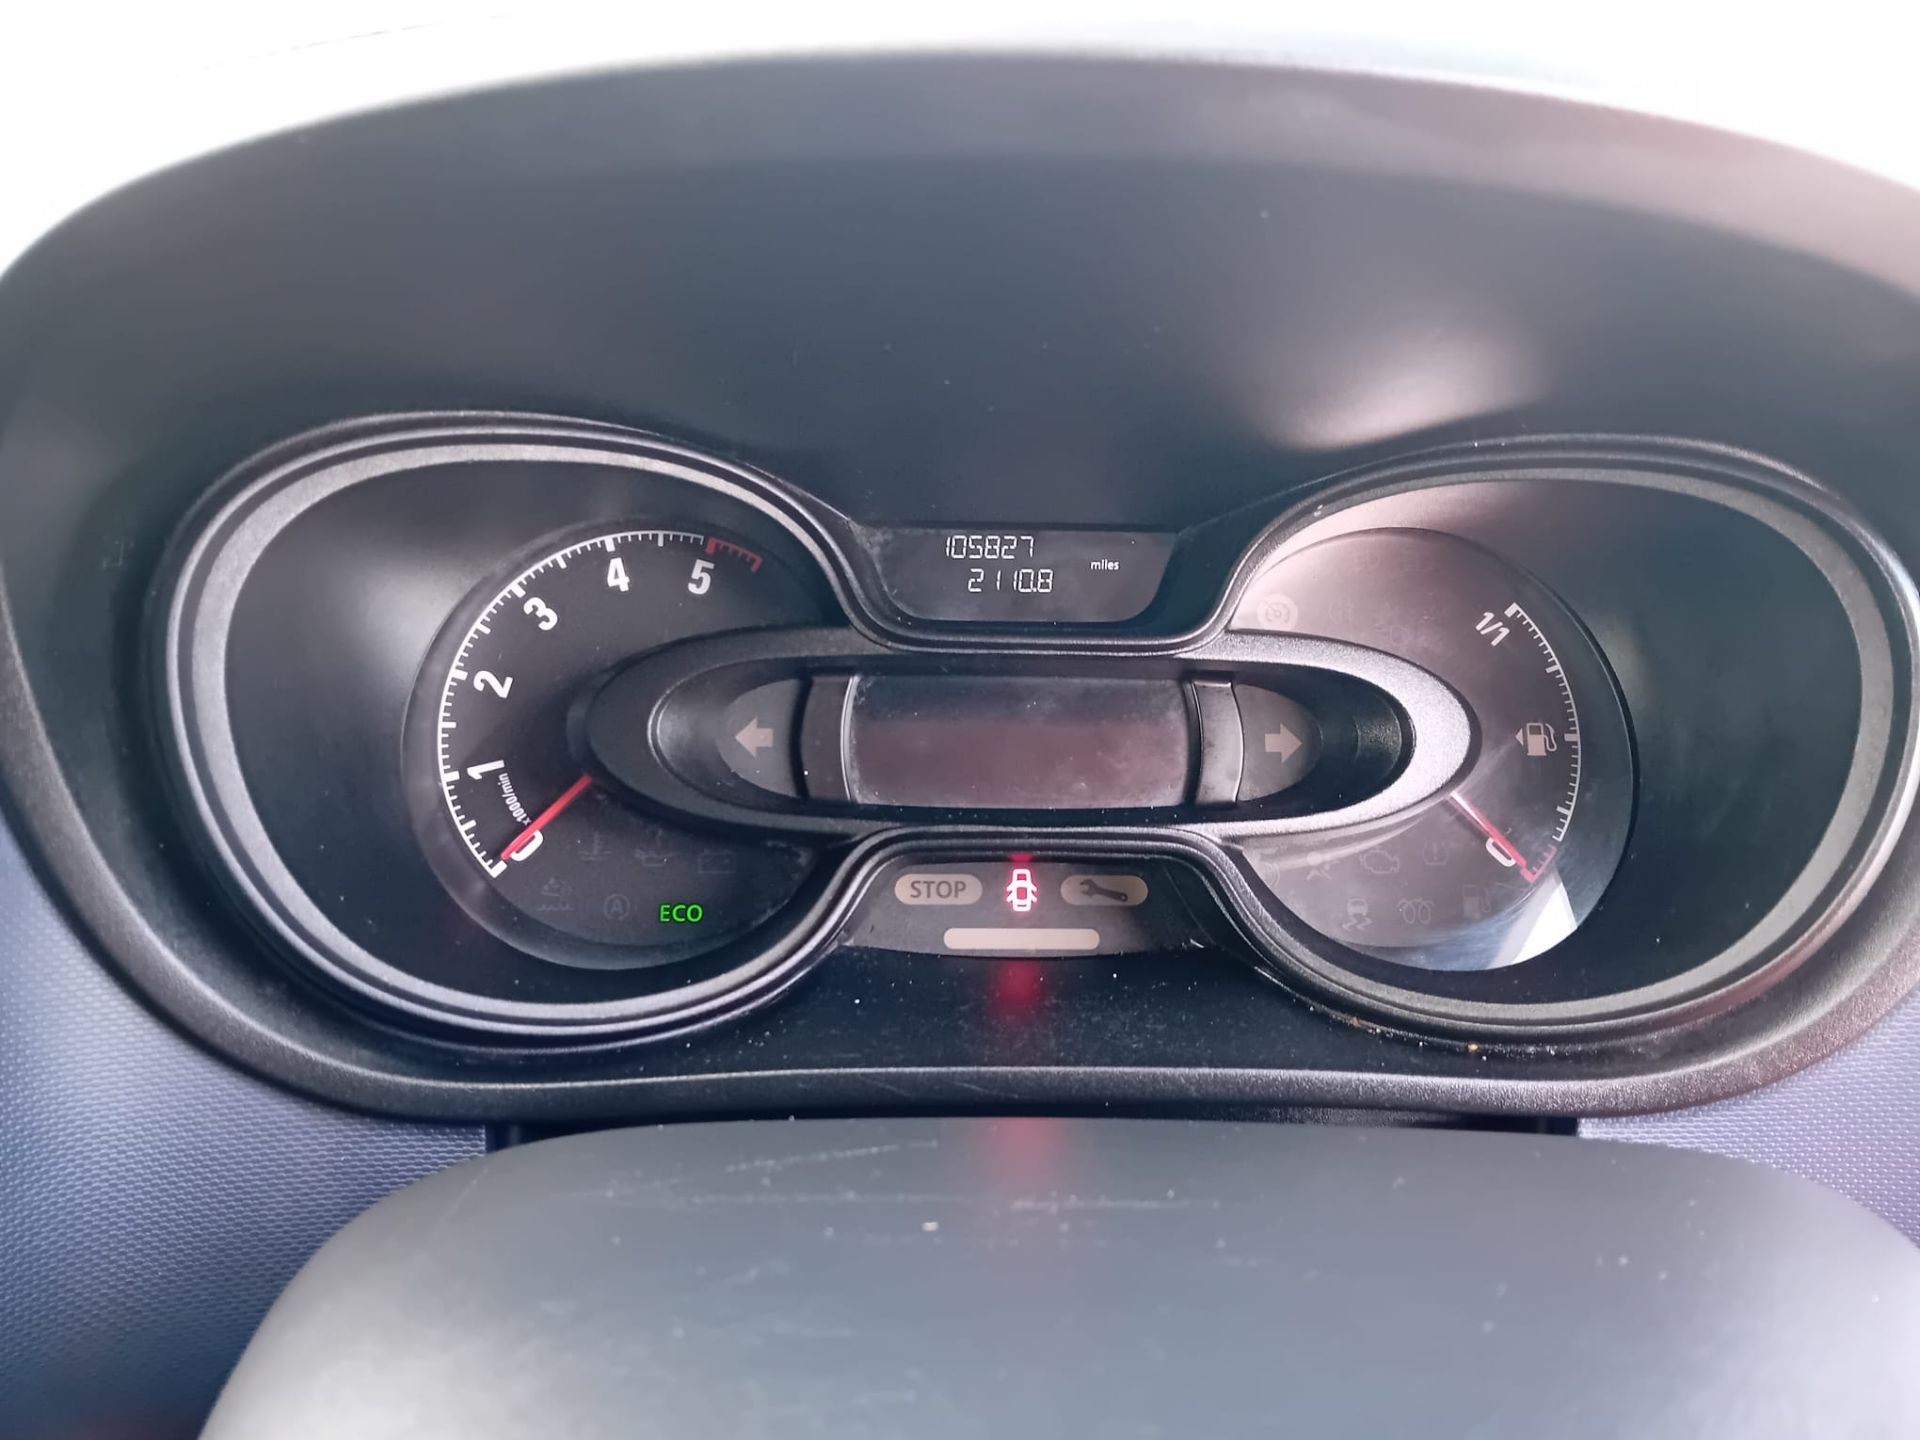 Vauxhall Vivaro 9 Seater - Image 7 of 12